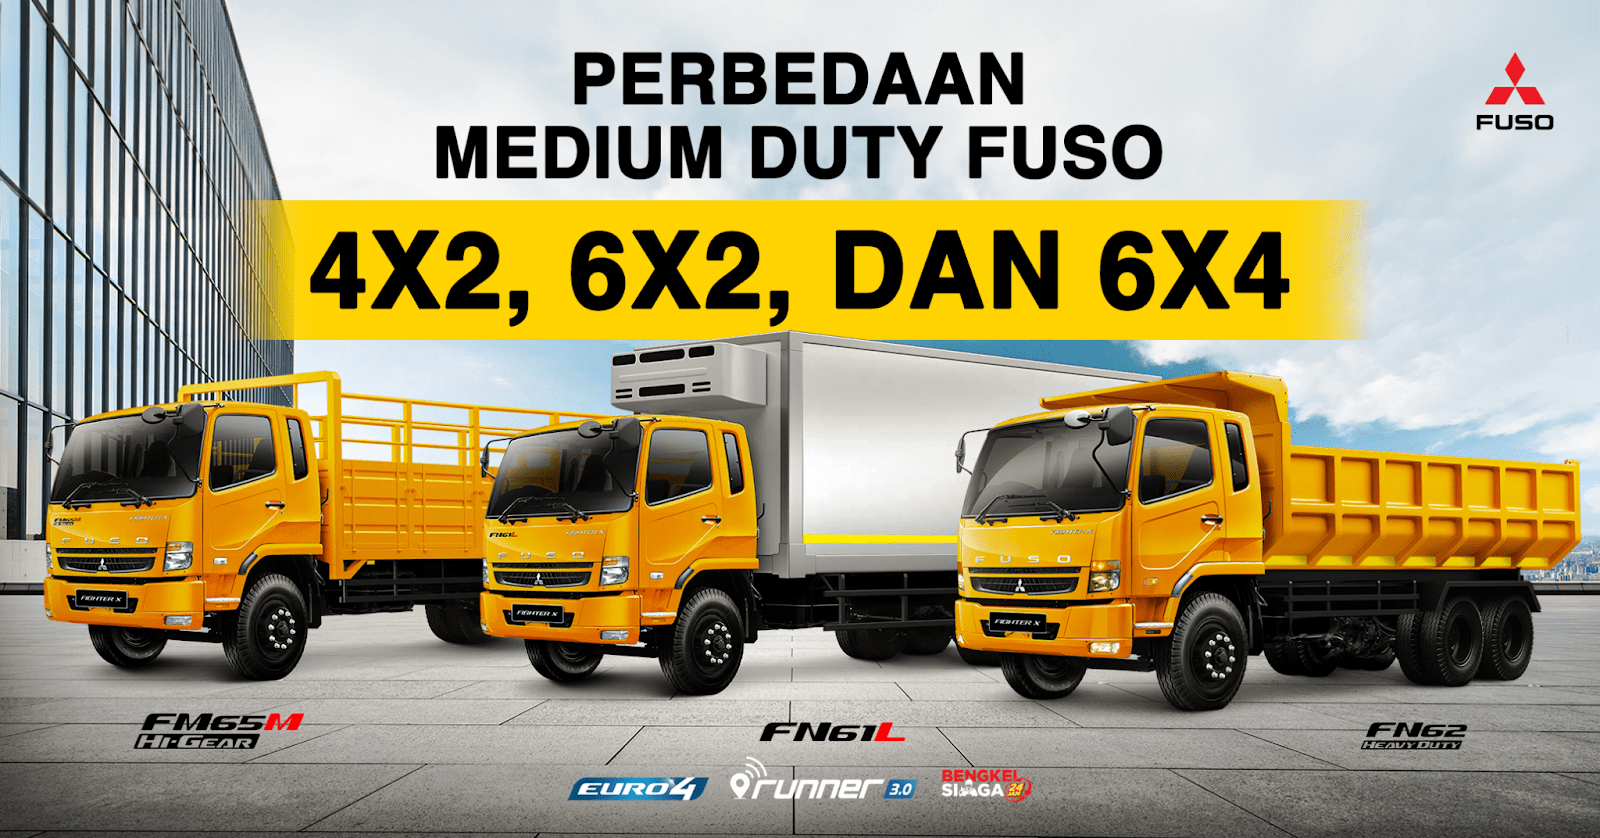 11. Perbedaan Medium Duty Fuso 4x2, 6x2, dan 6x4